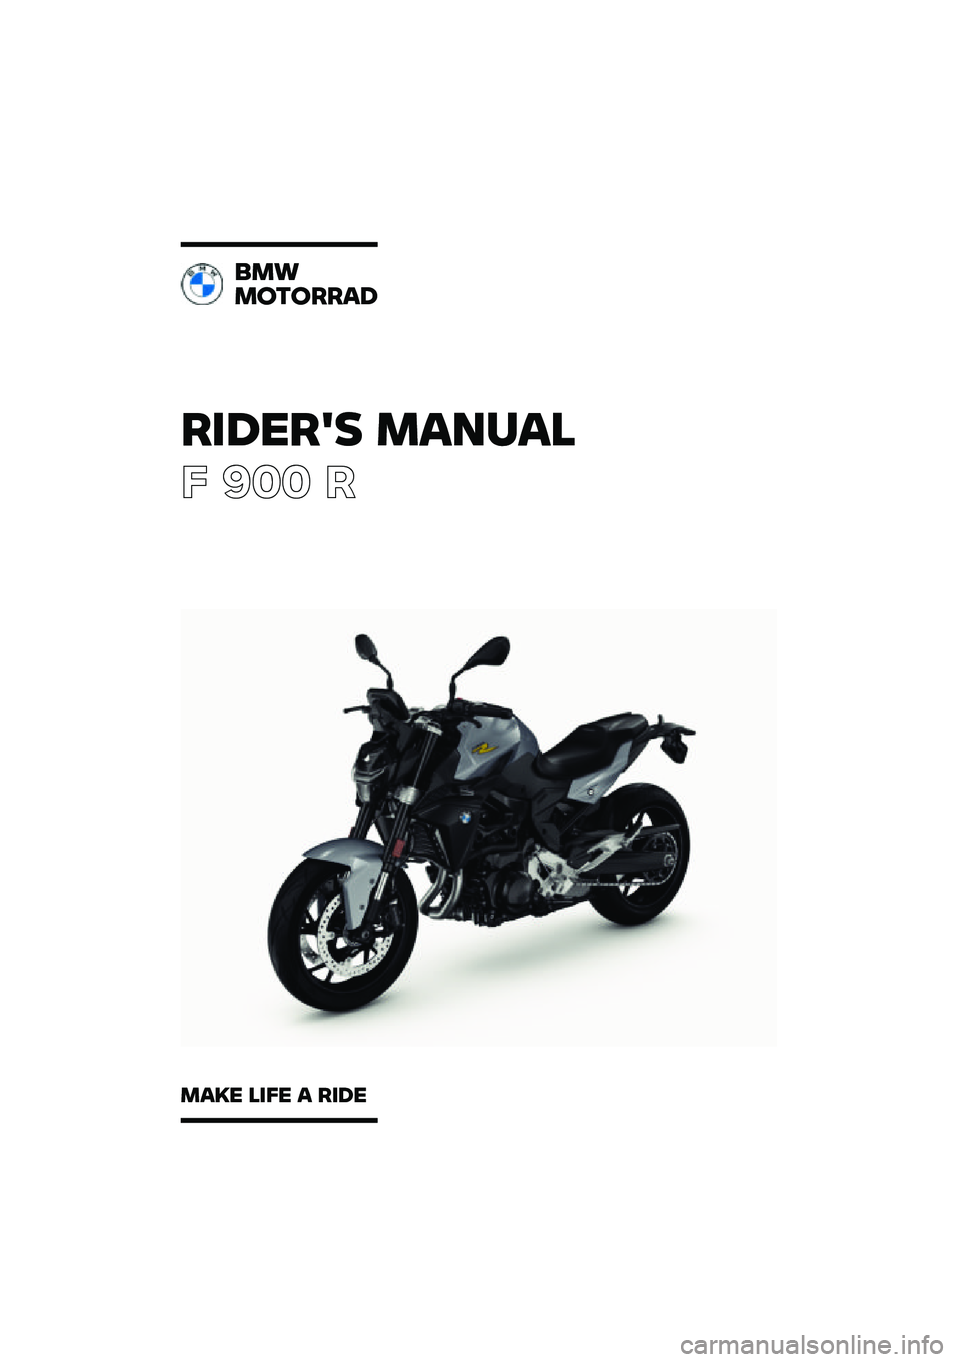 BMW MOTORRAD F 900 R 2021  Riders Manual (in English) ������� �\b�	�
��	�\f
� ��� �
�
�\b�
�\b������	�
�\b�	�� �\f��� �	 ���� 